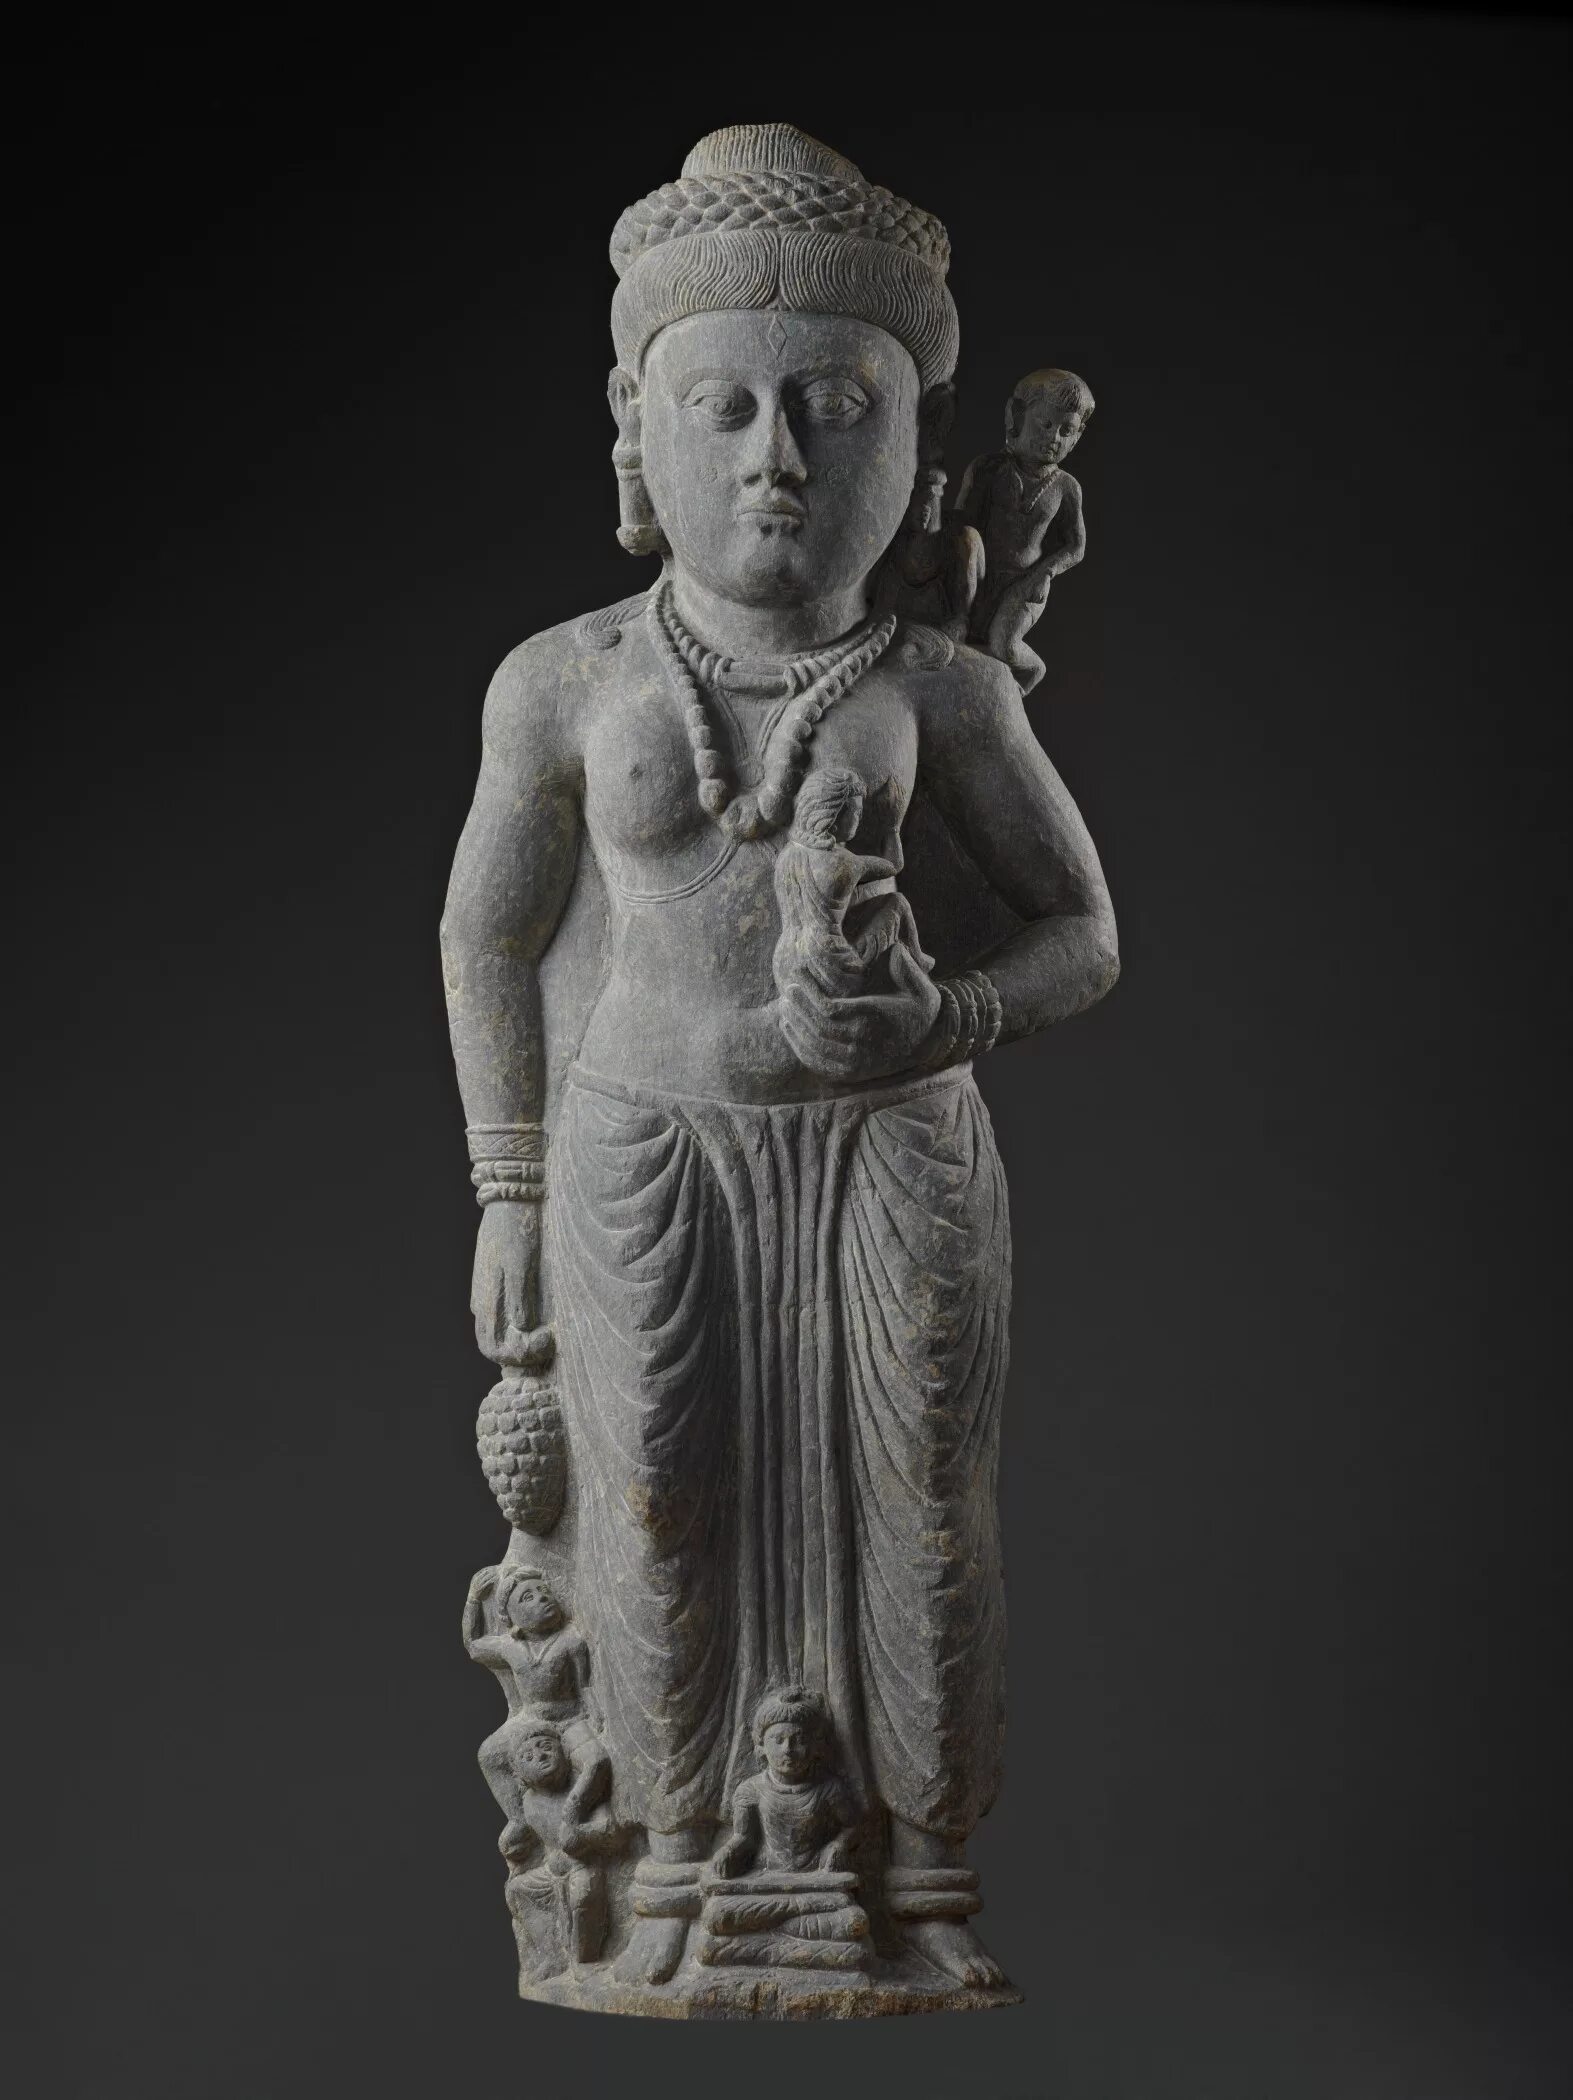 Богини древних времен. Гандхара и Матхура. Богиня с рогом изобилия Гандхара. Богиня харити с младенцем Гандхара.